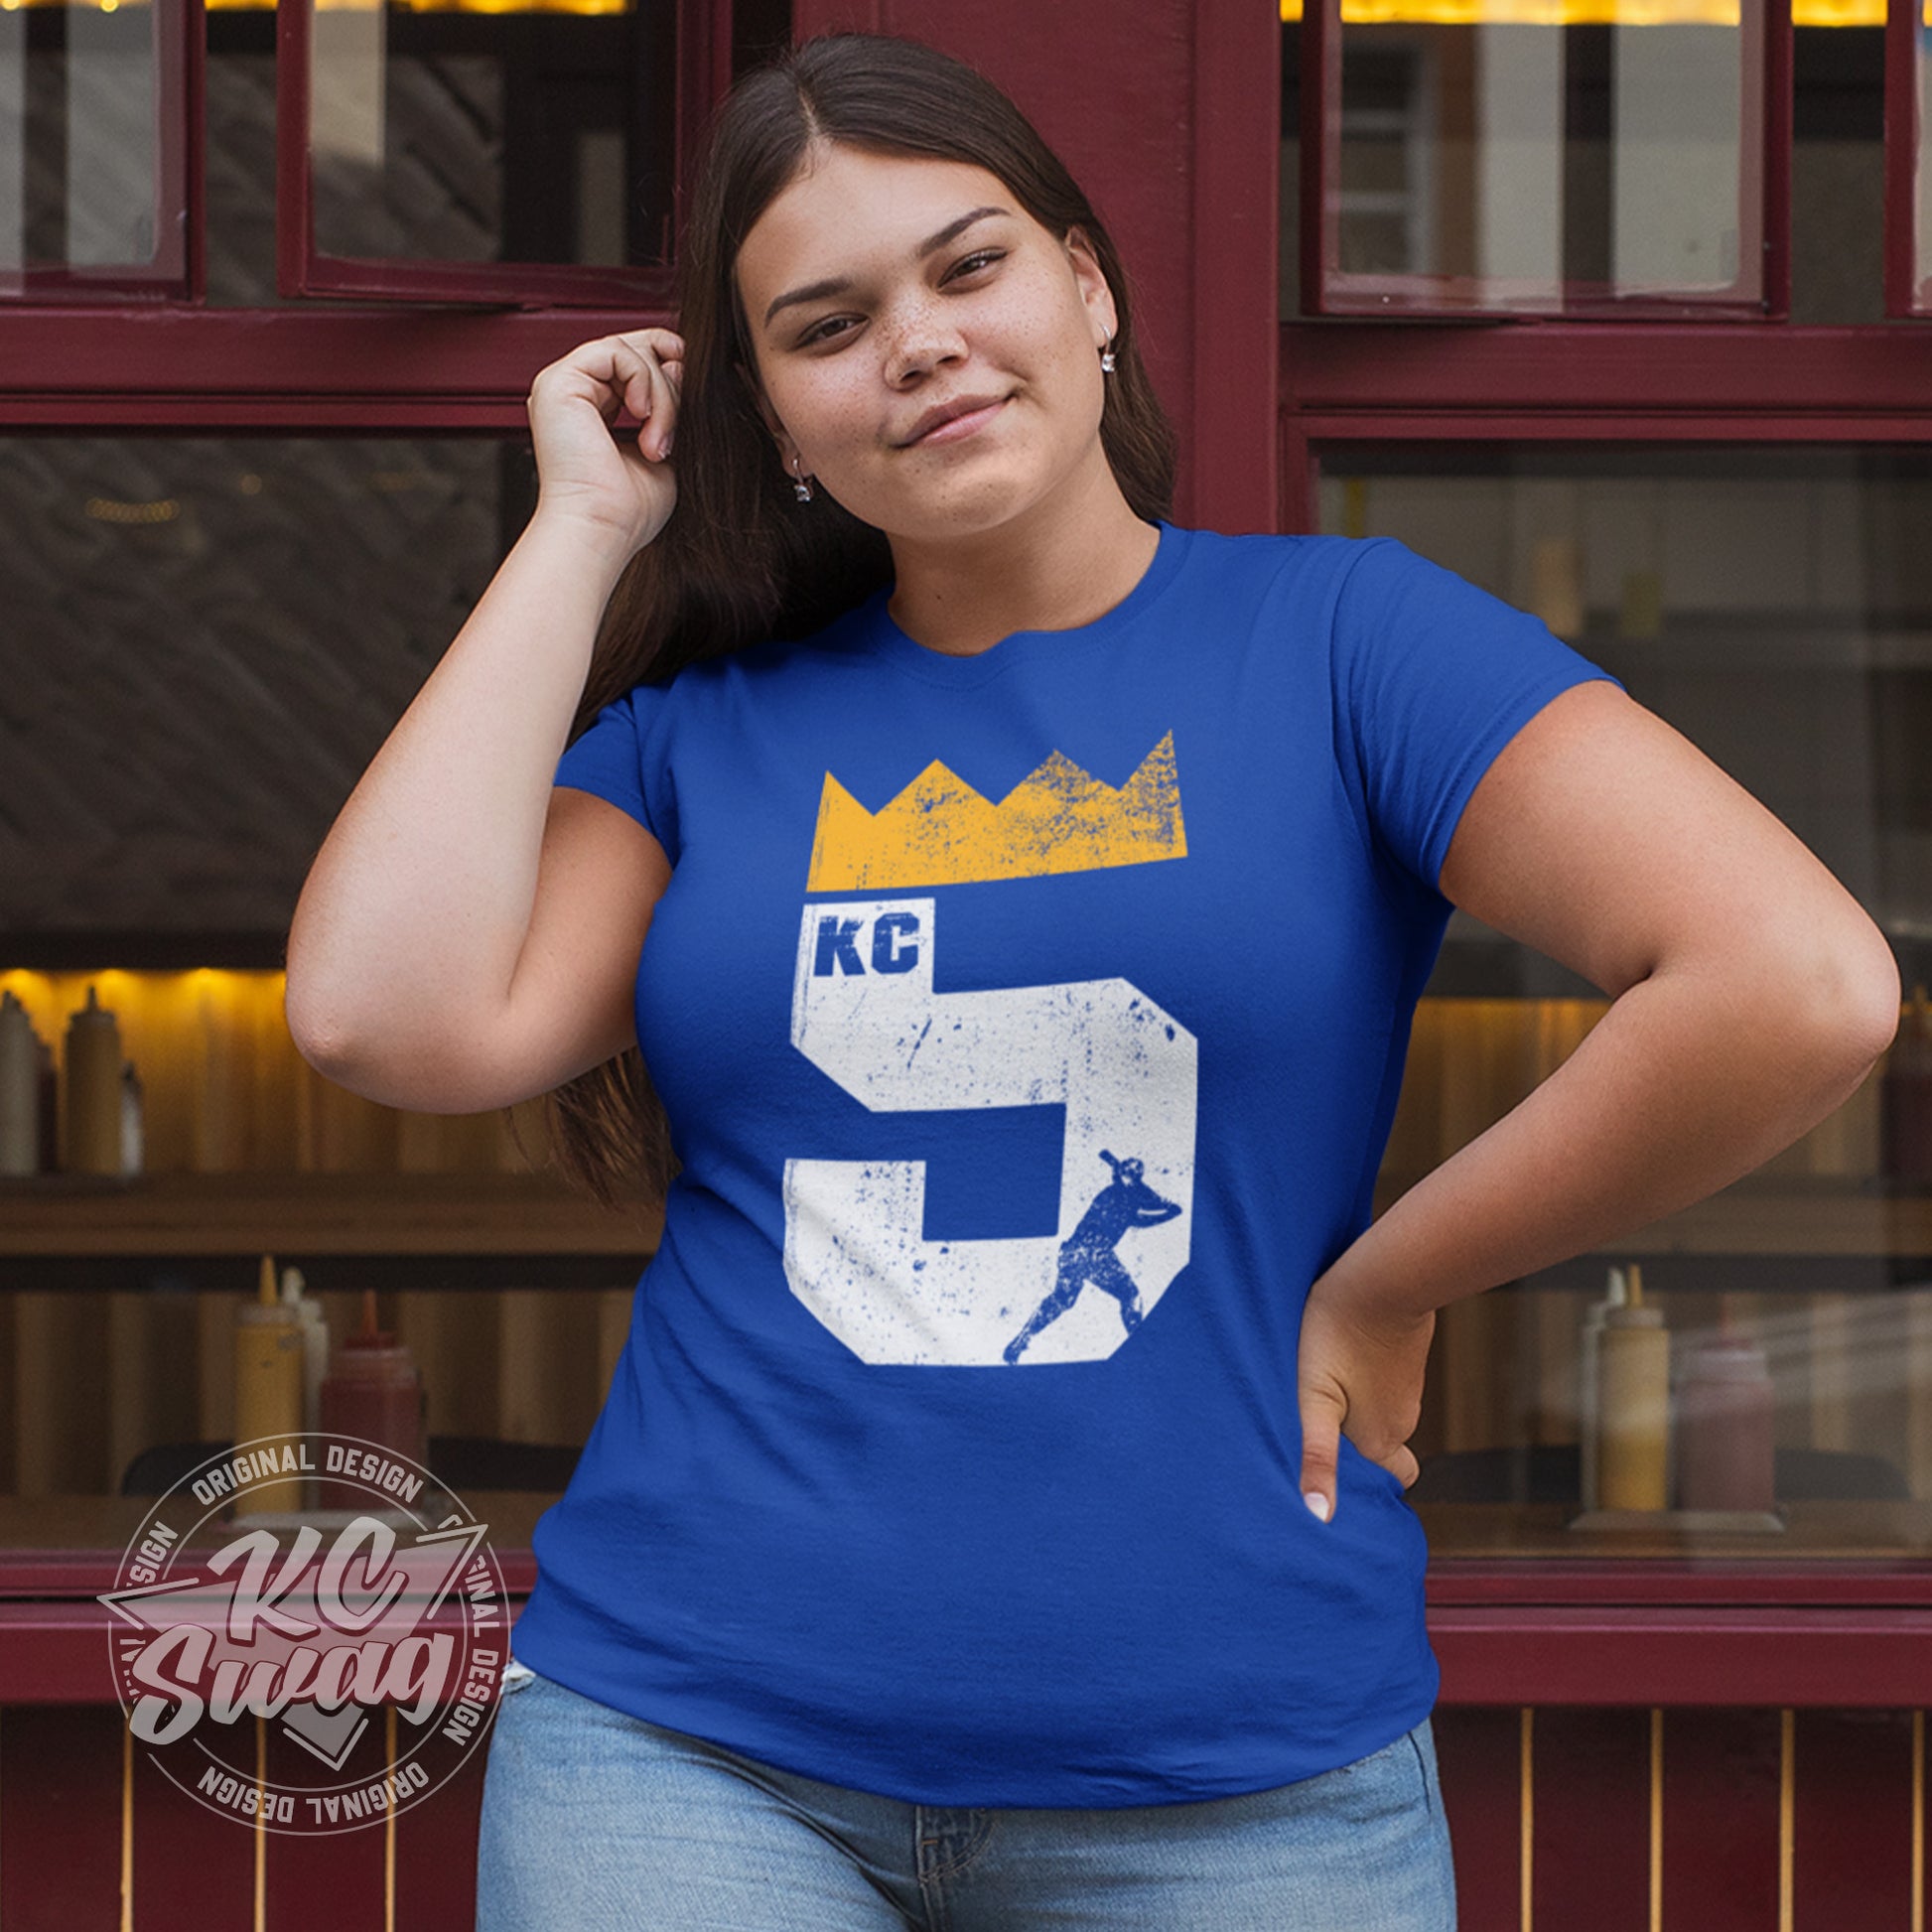 KC Swag - Kansas City Royals, Brett Five Crown design on royal blue unisex t-shirt worn by female  model standing outside restaurant windows